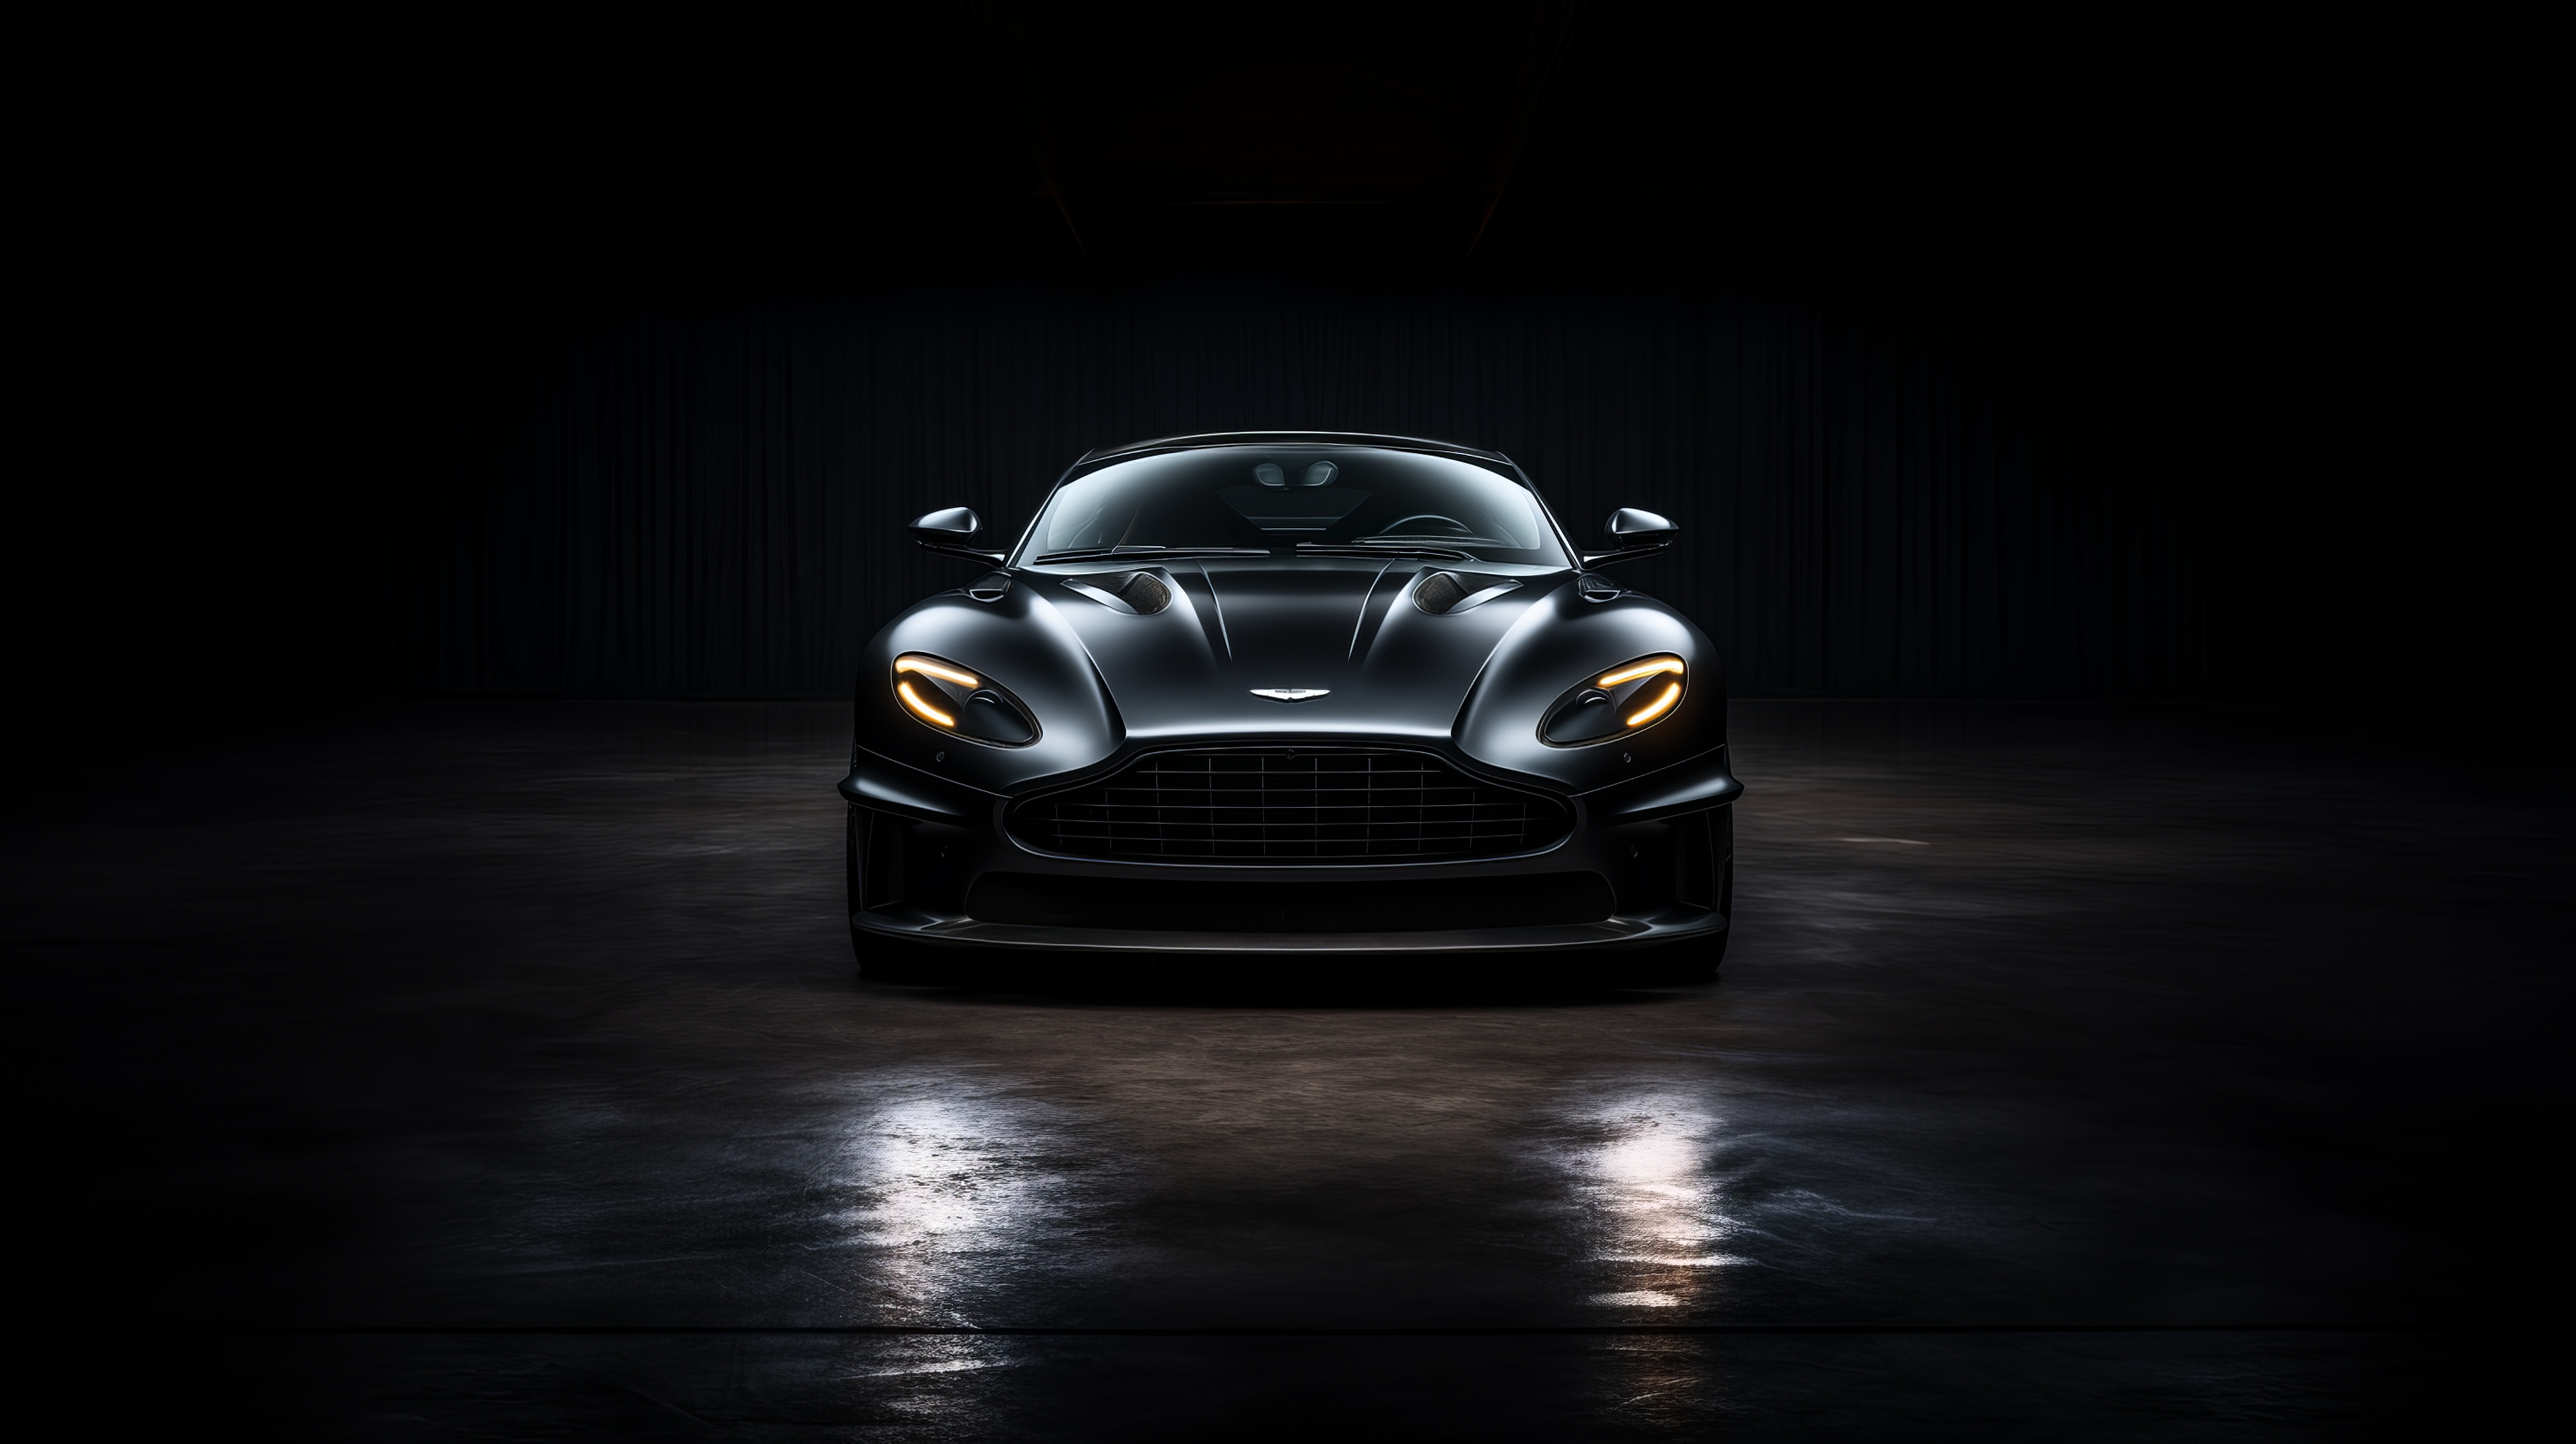 General 2912x1632 AI art sports car Aston Martin black frontal view headlights car simple background black background minimalism